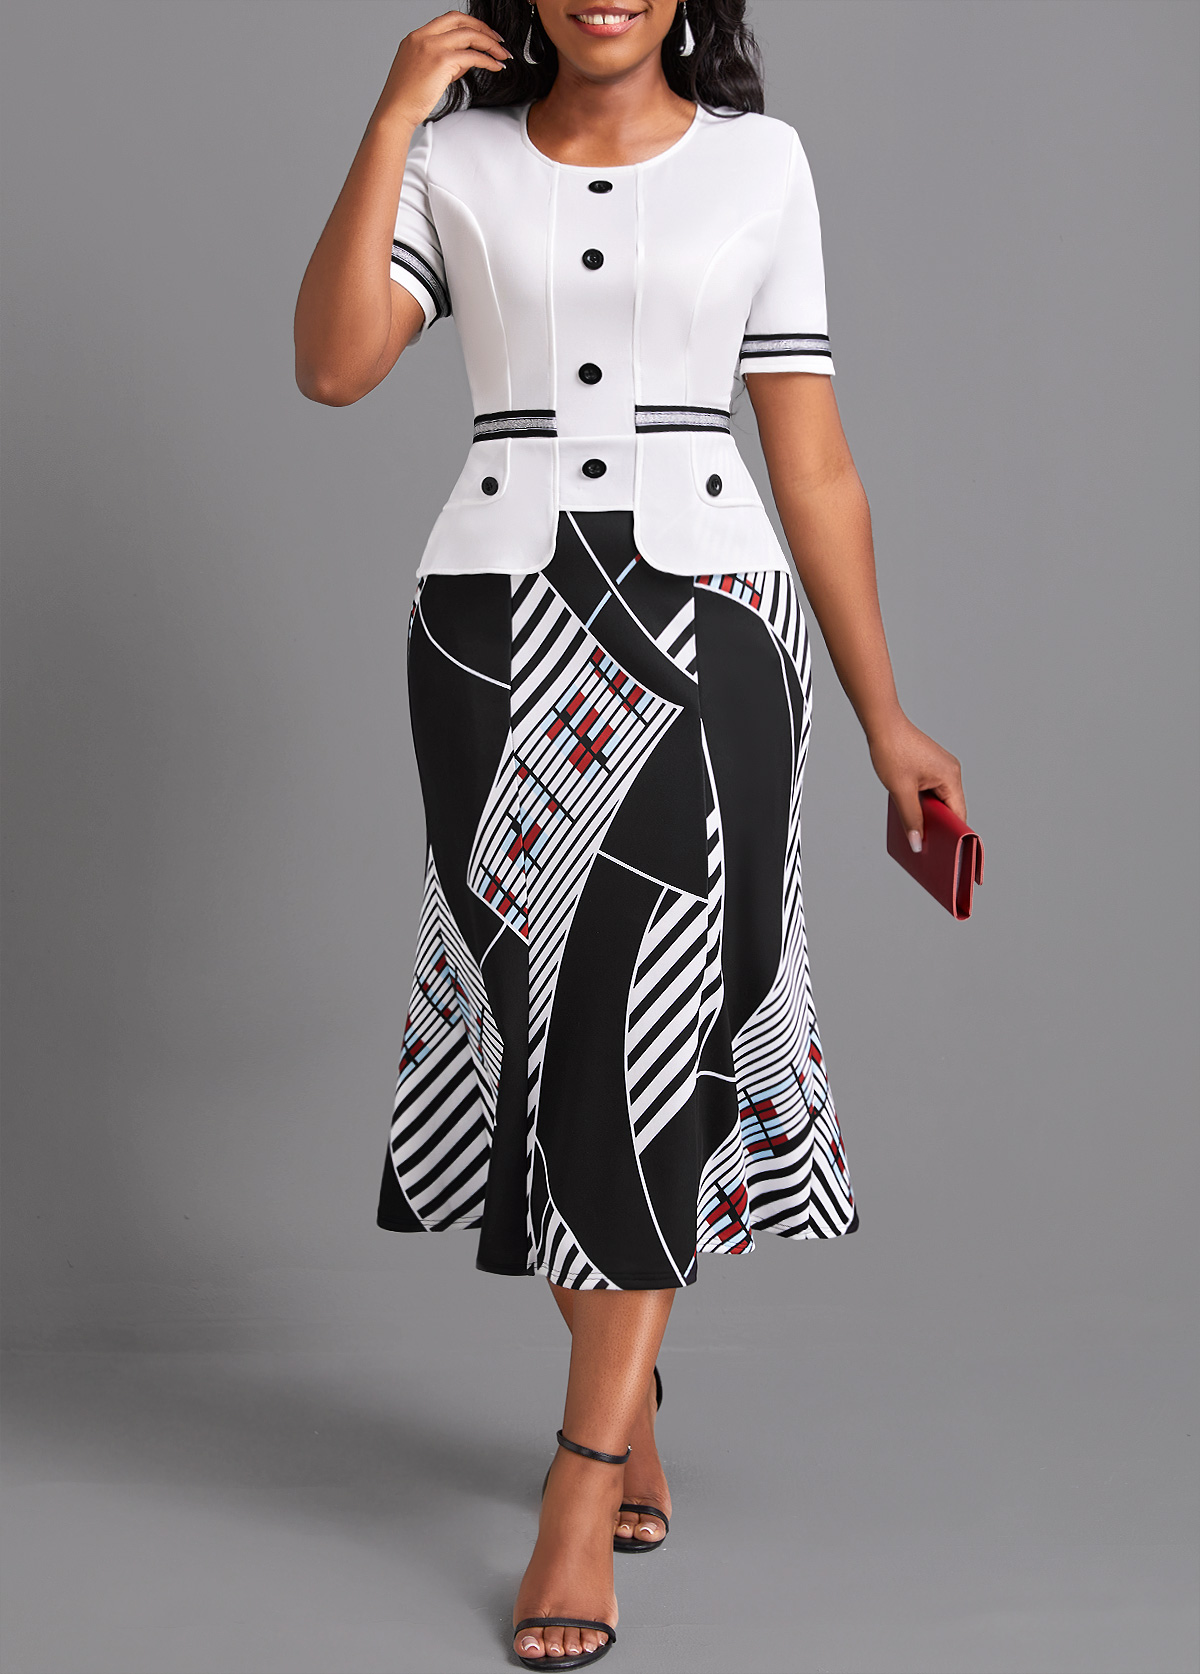 ROTITA Contrast Binding Geometric Print White Bodycon Dress